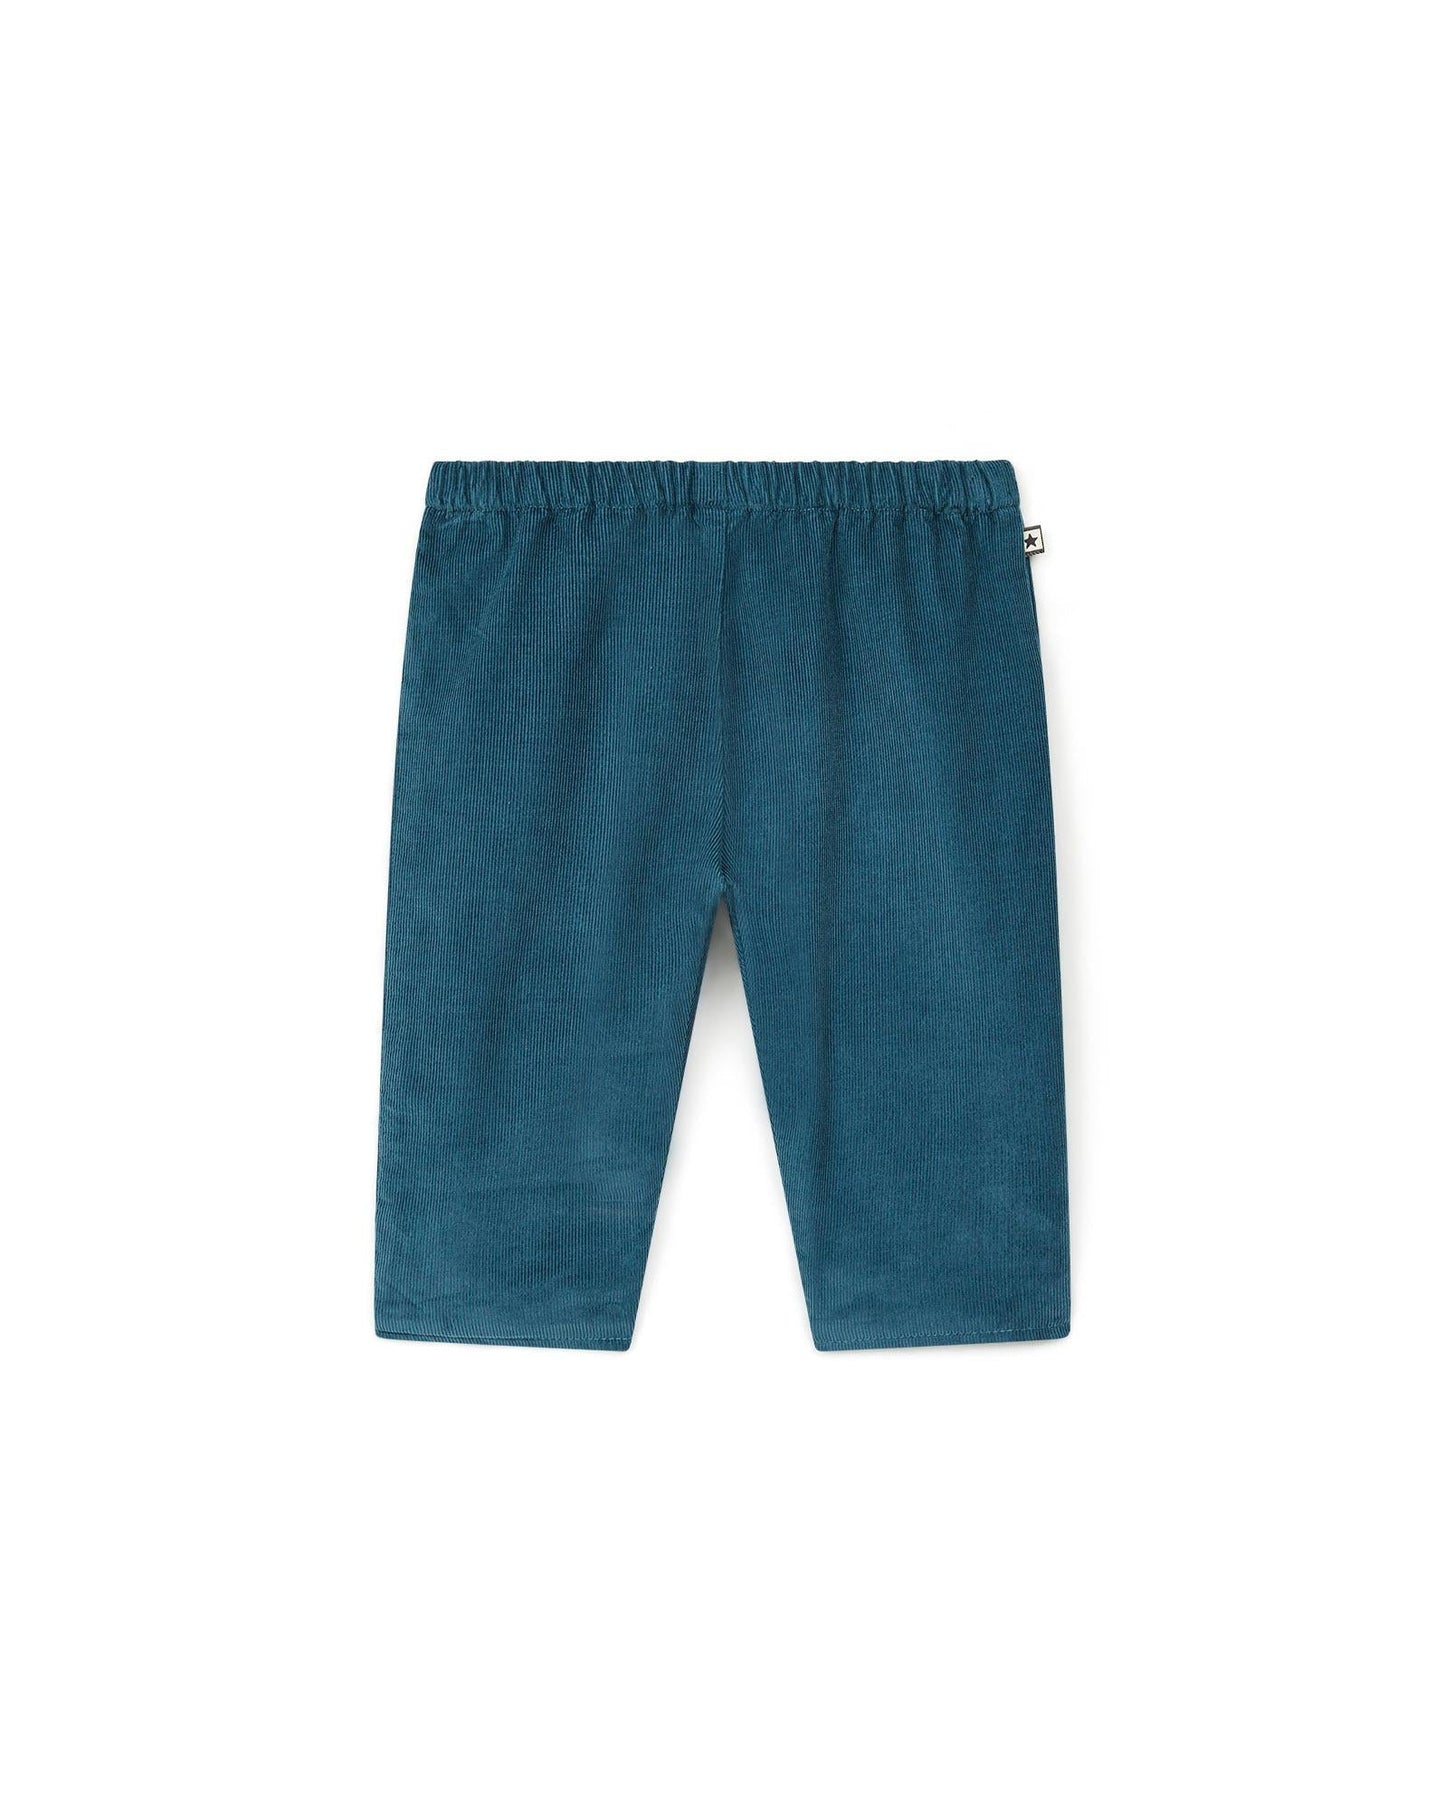 Pantalon - Brioche bleu bébé en velours